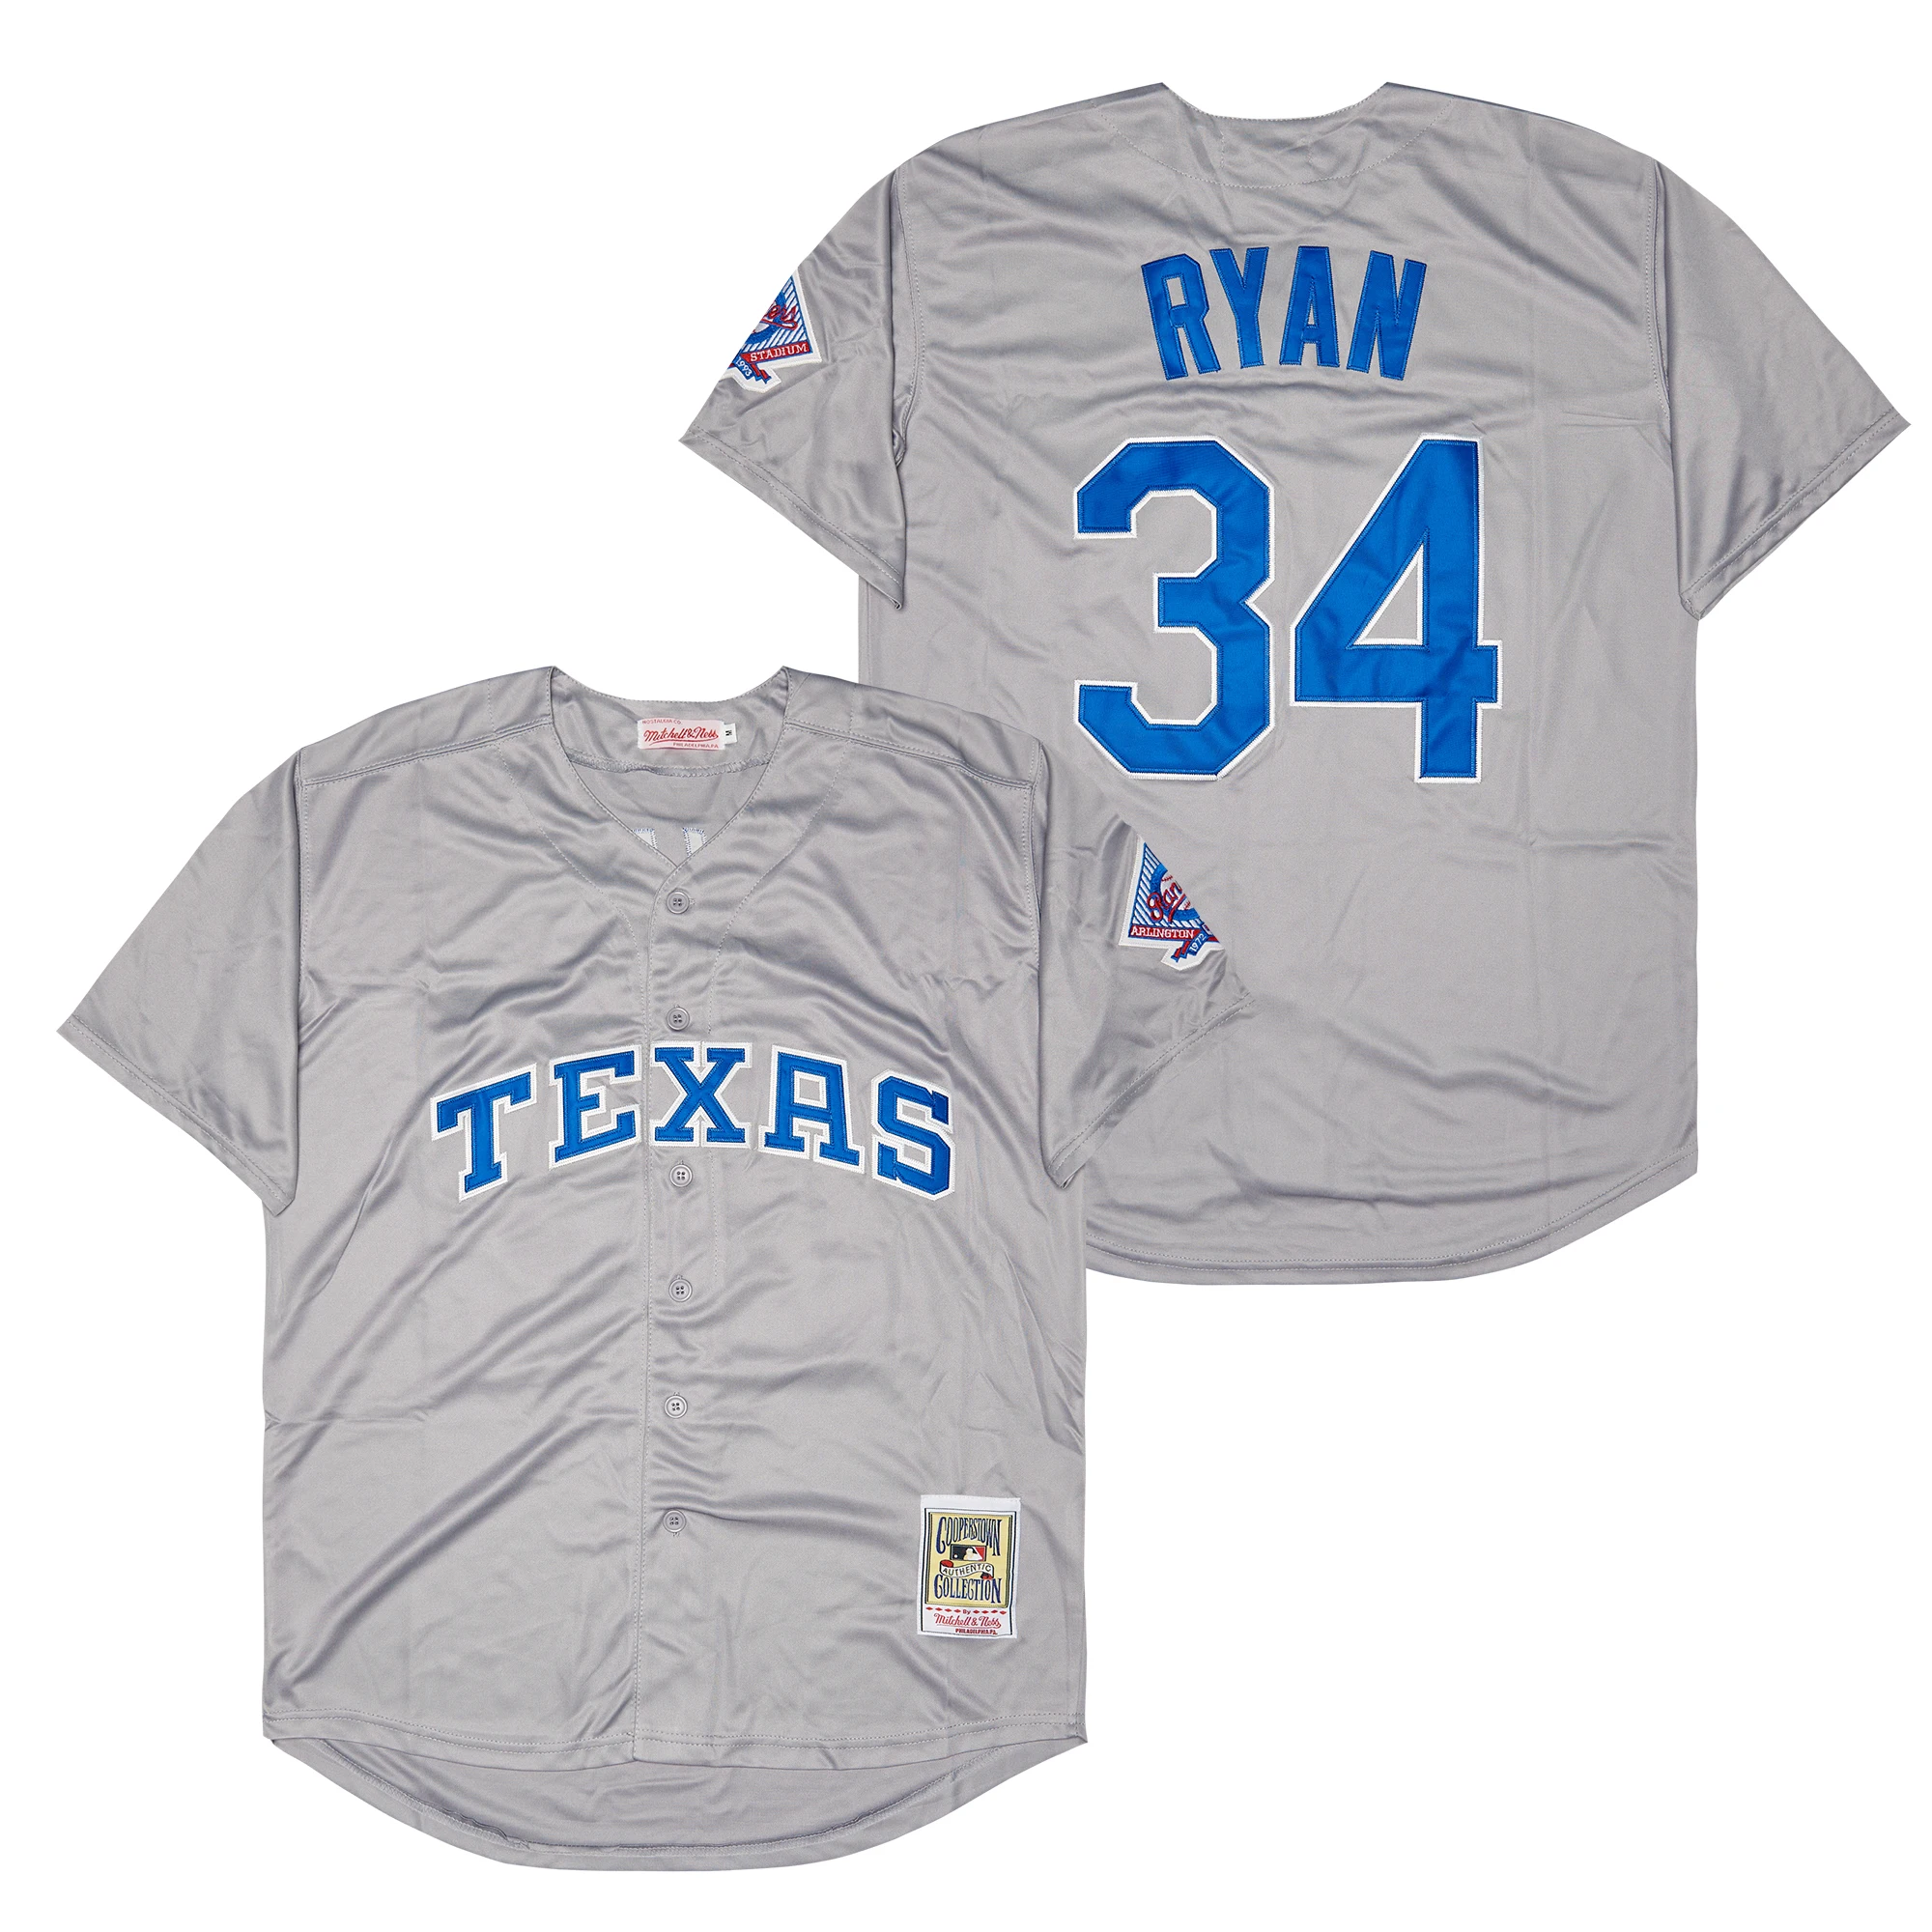 Source Texas Baseball Jersey 34 Nolan Ryan 7 Ivan Rodriguez Throwback jersey  stitched on m.